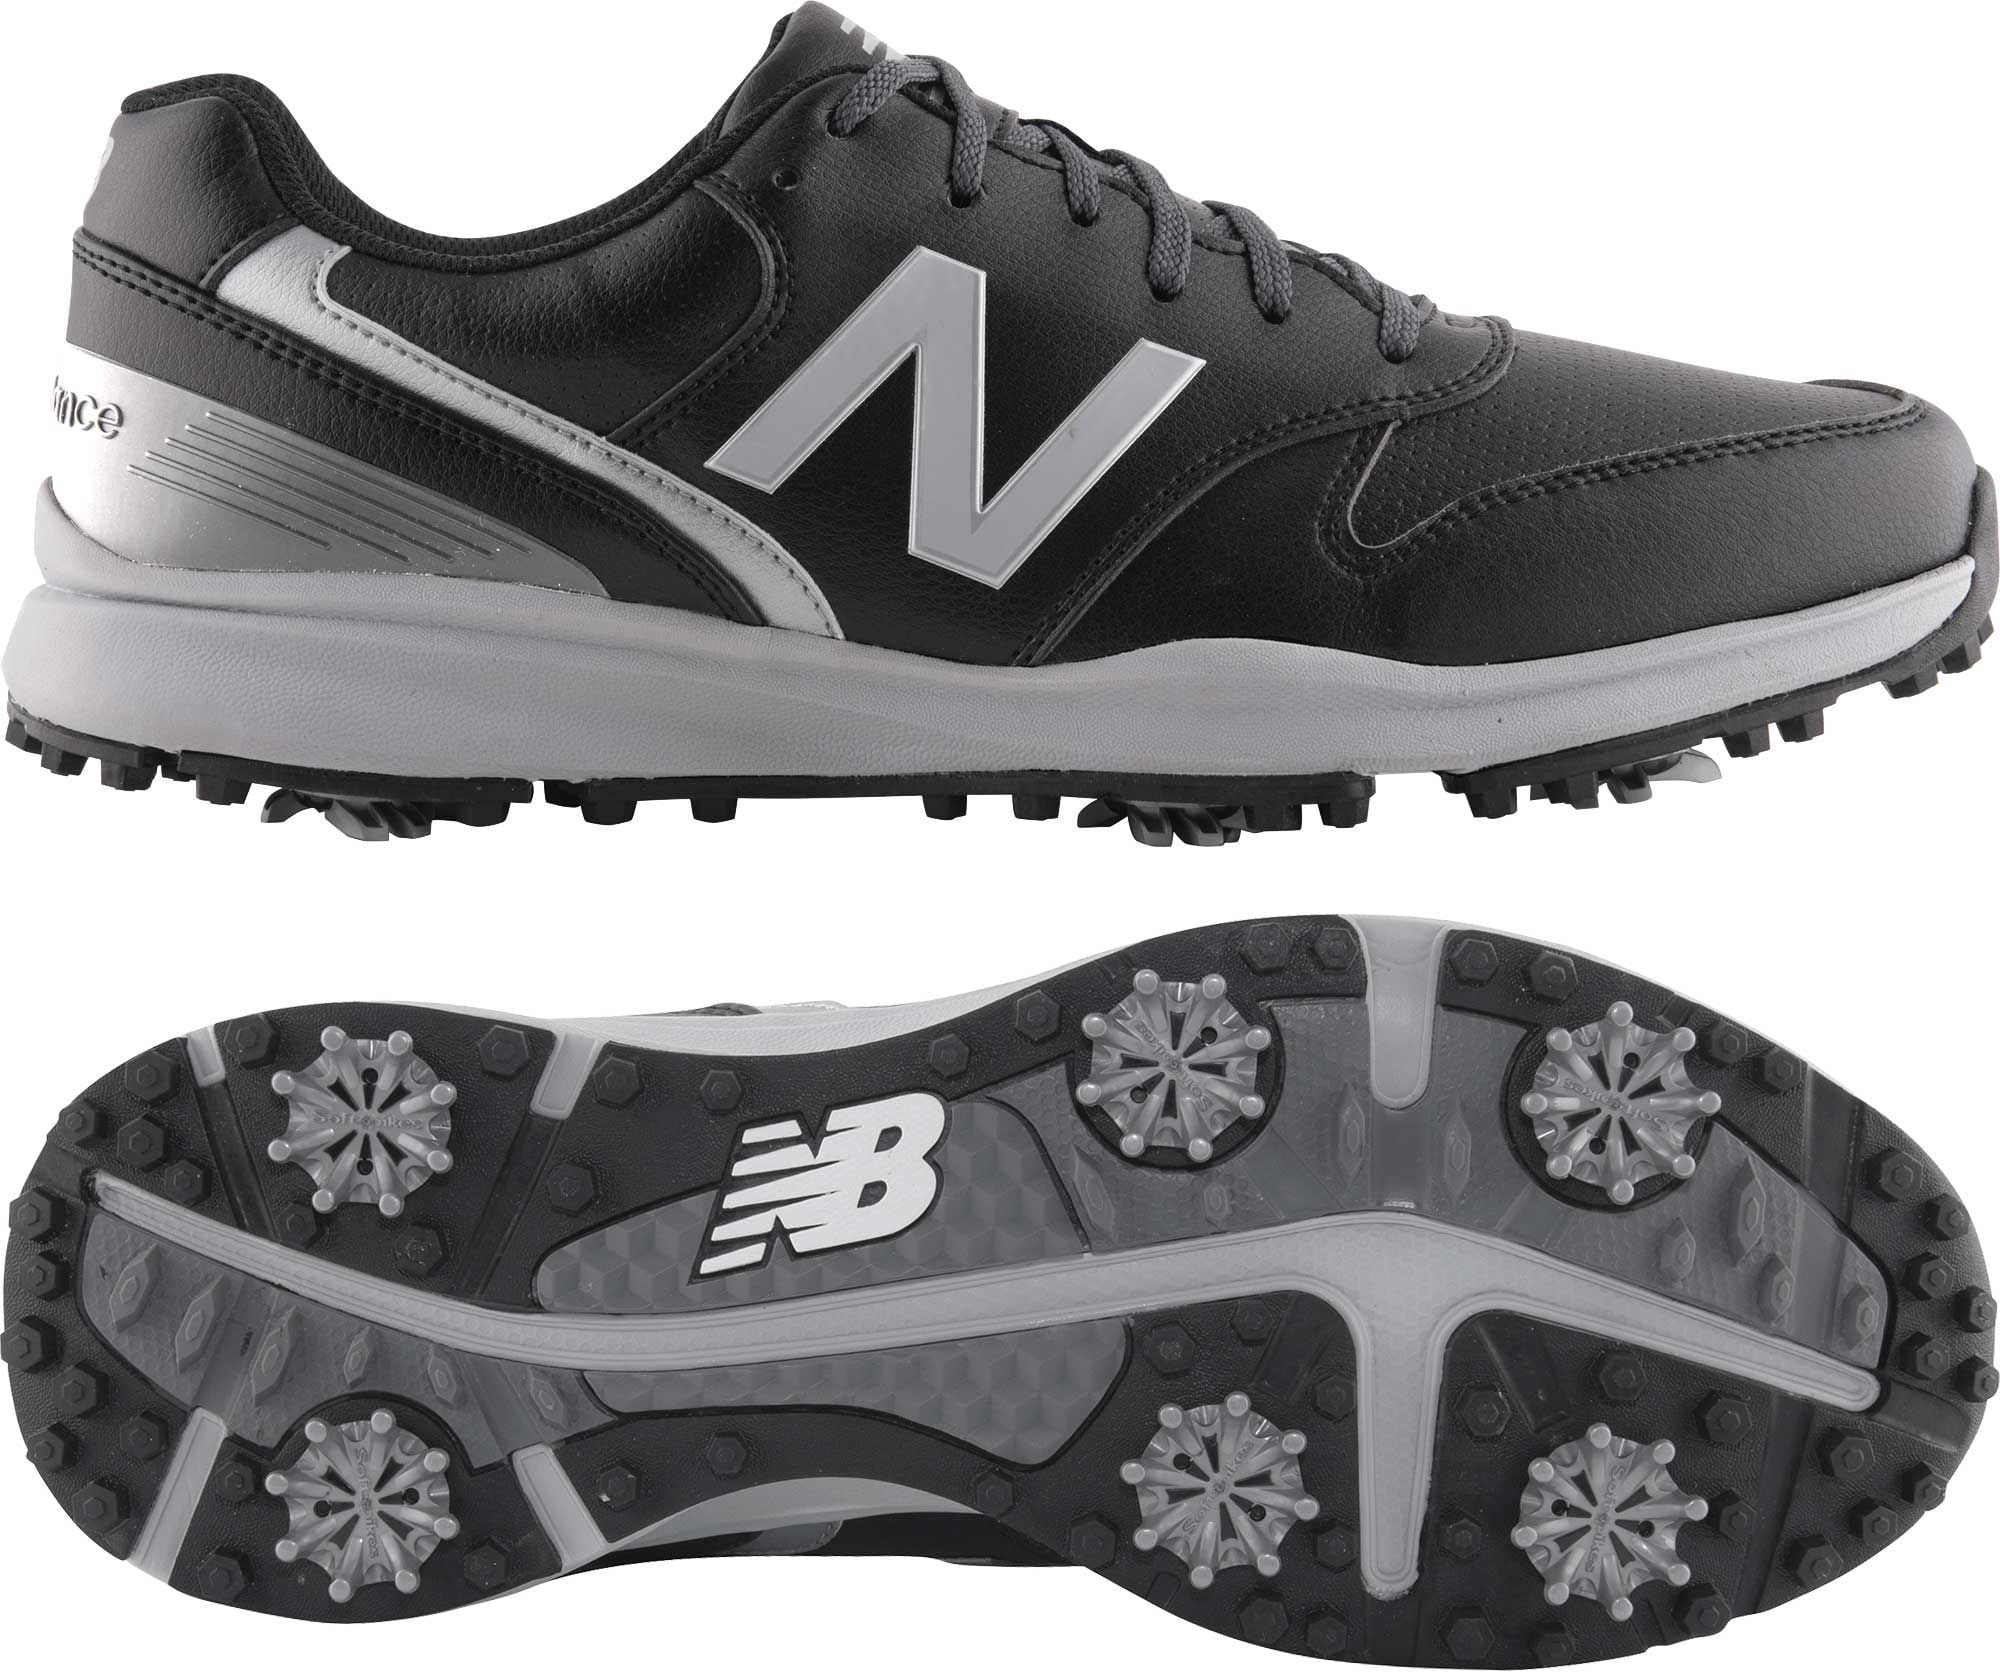 New Balance Men's Sweeper Golf Shoes - Walmart.com ...